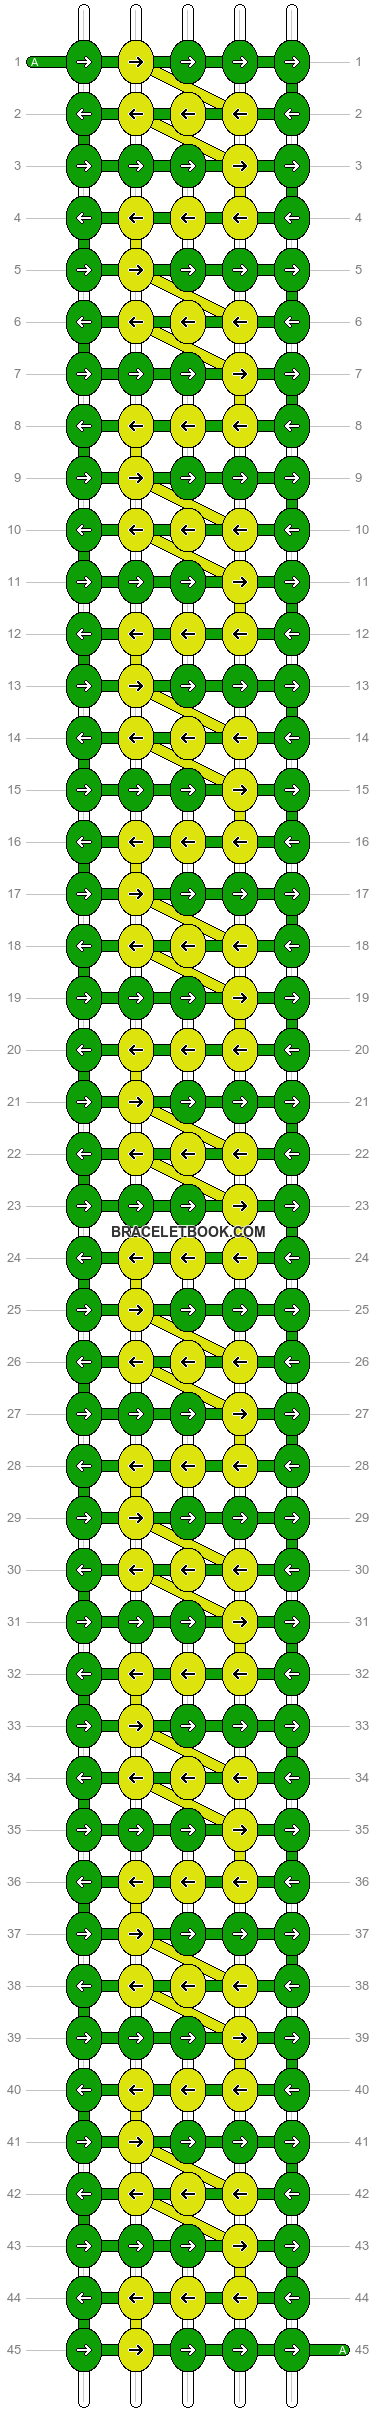 Alpha pattern #17859 variation #60919 pattern